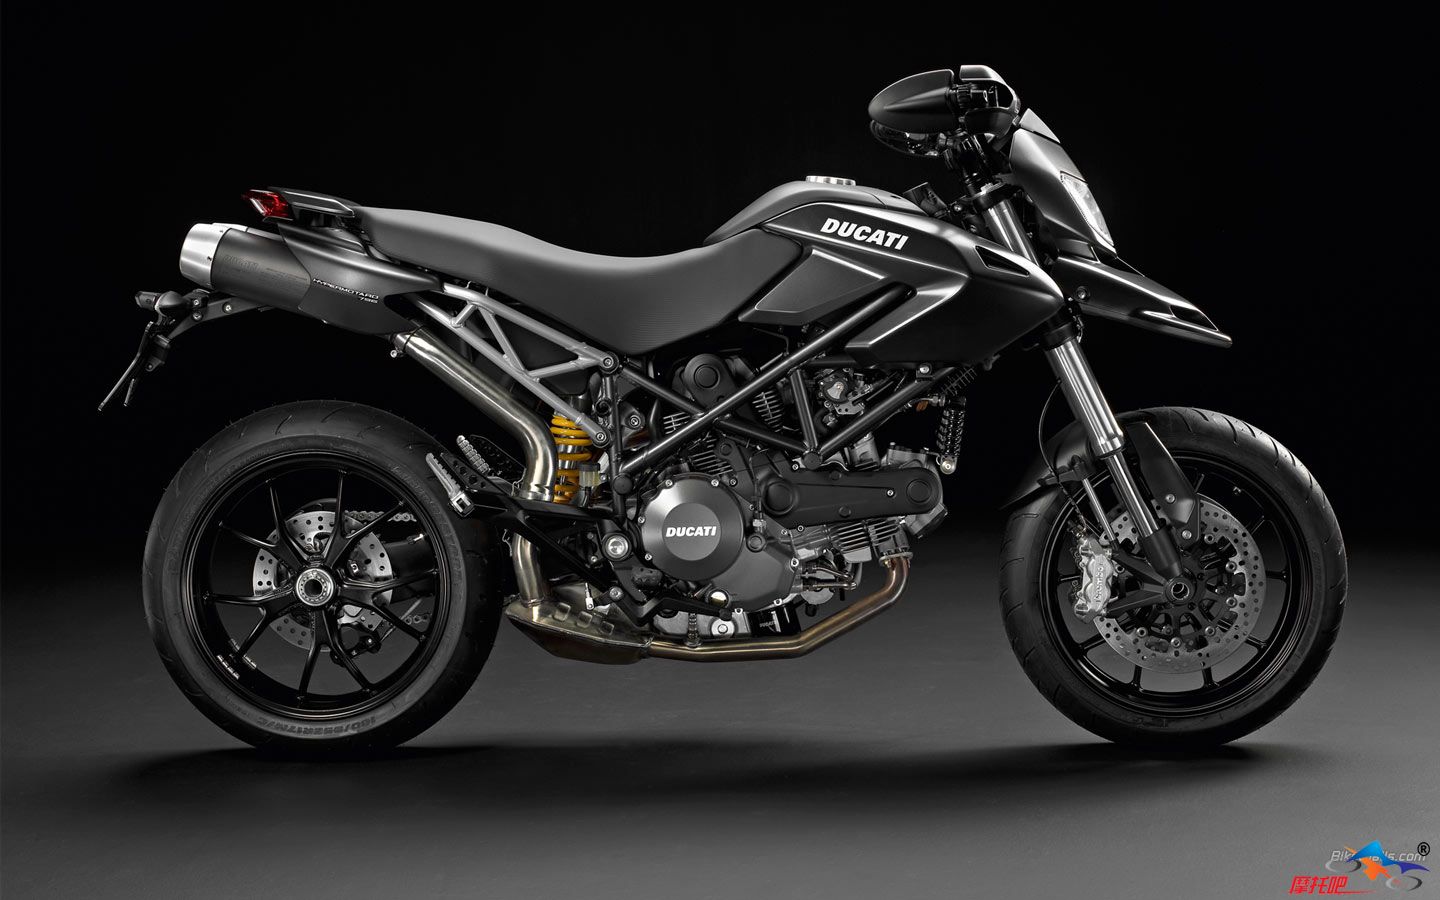 Ducati_Hypermotard_796_2010_06_1440x900.jpg